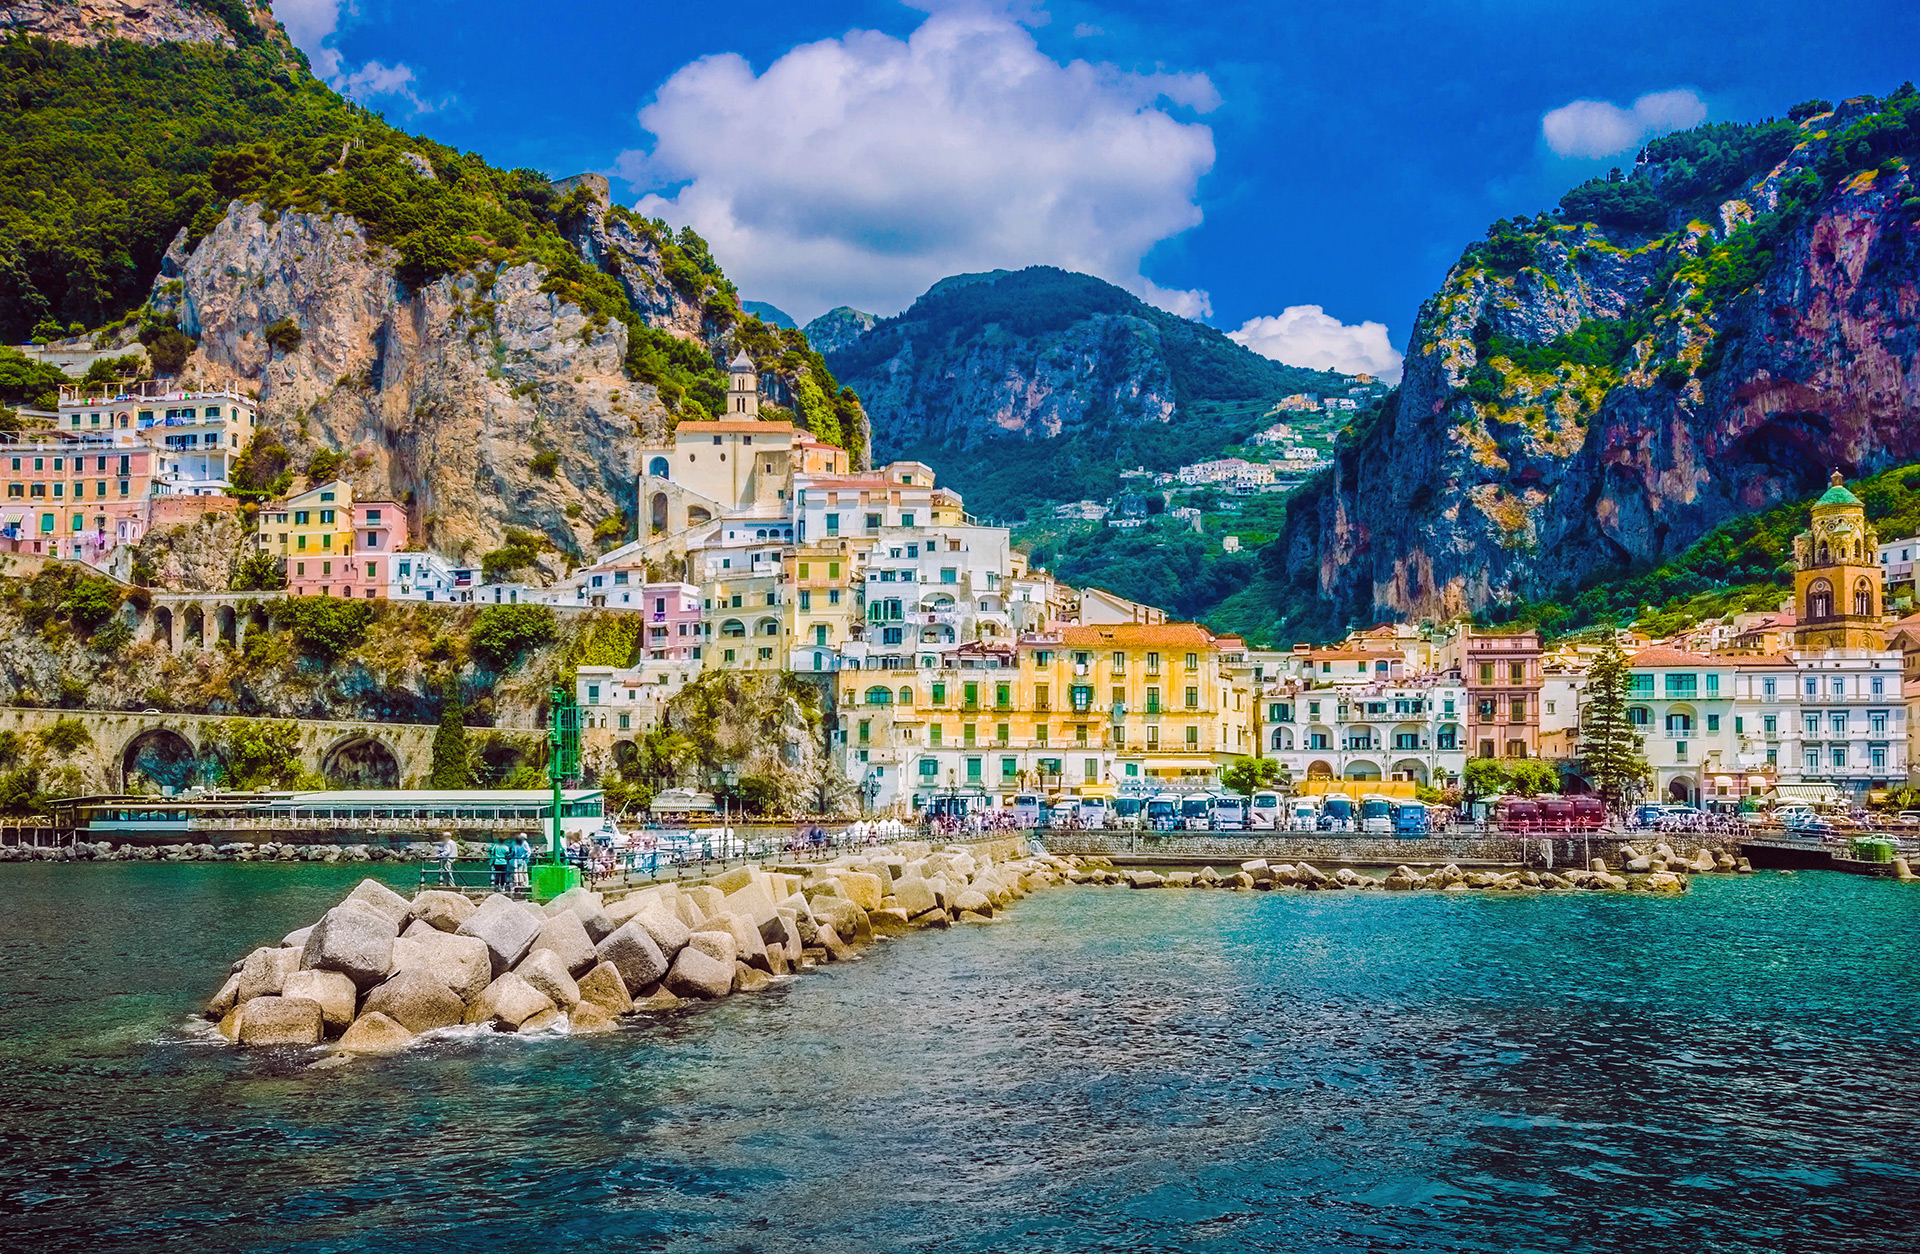 From Positano to Capri and vice versa